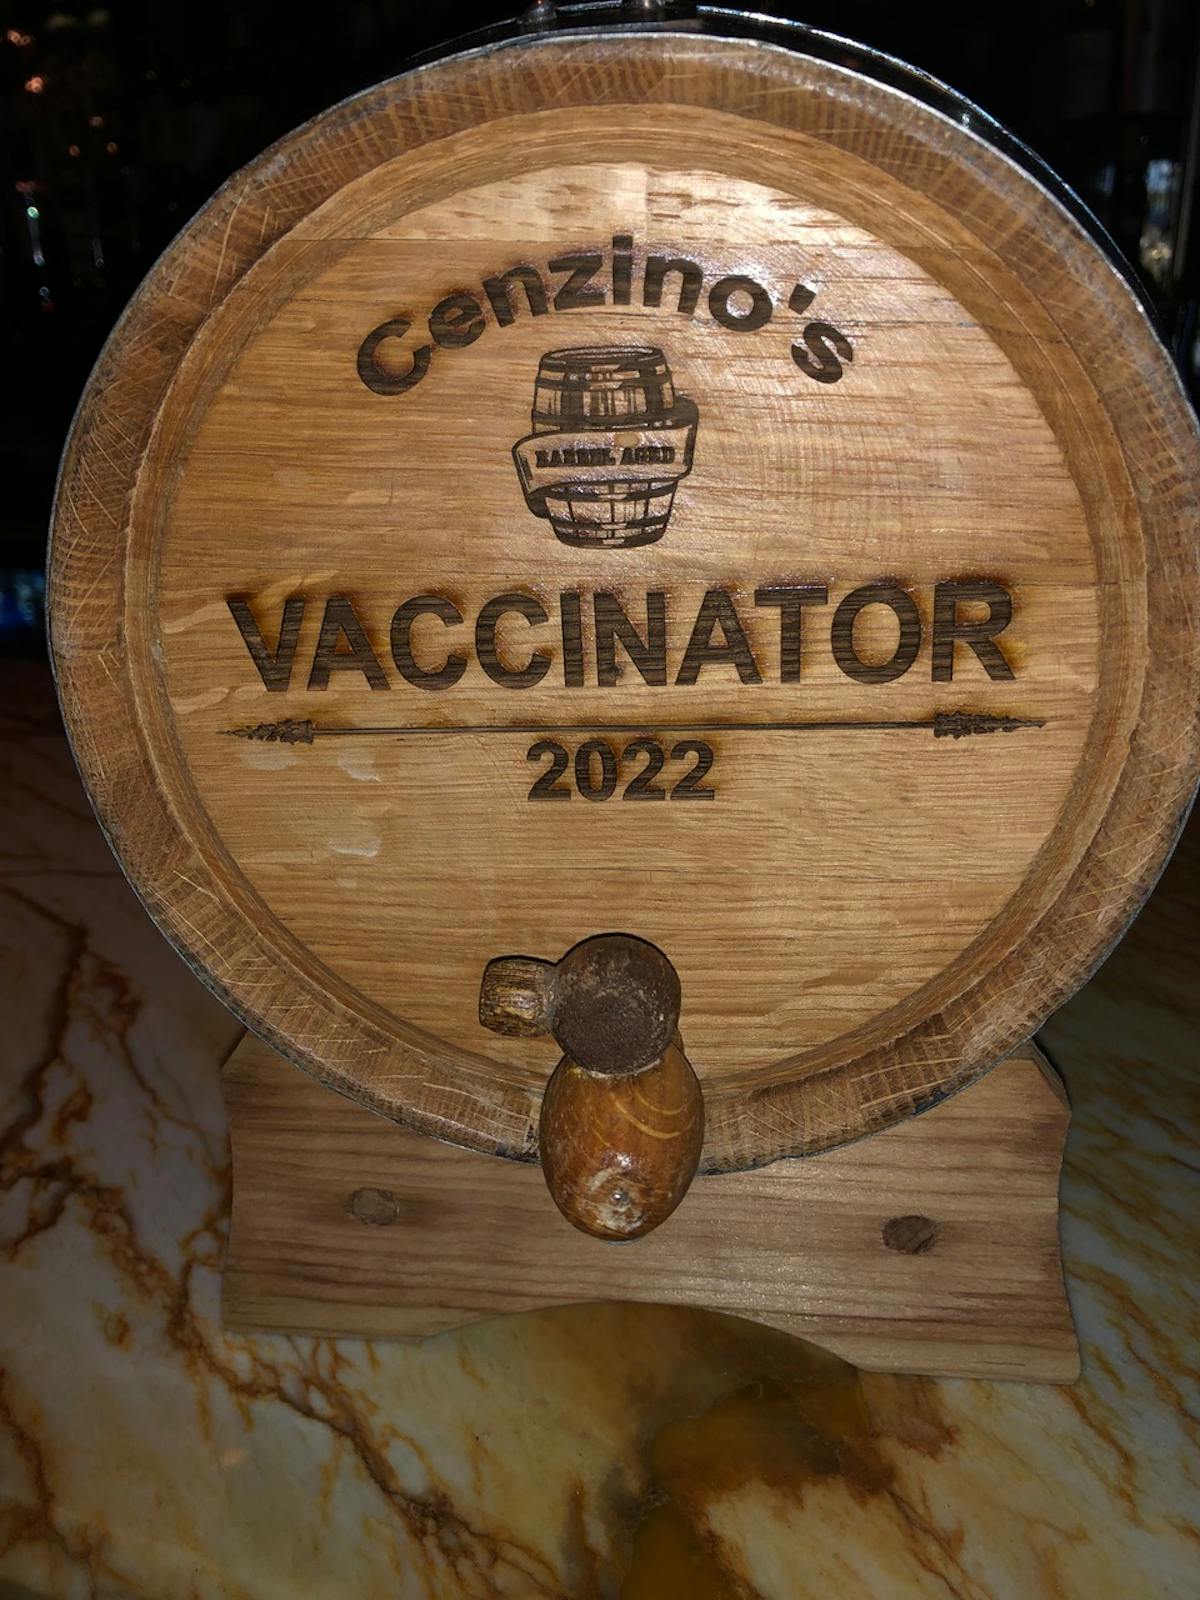 The Vaccinator